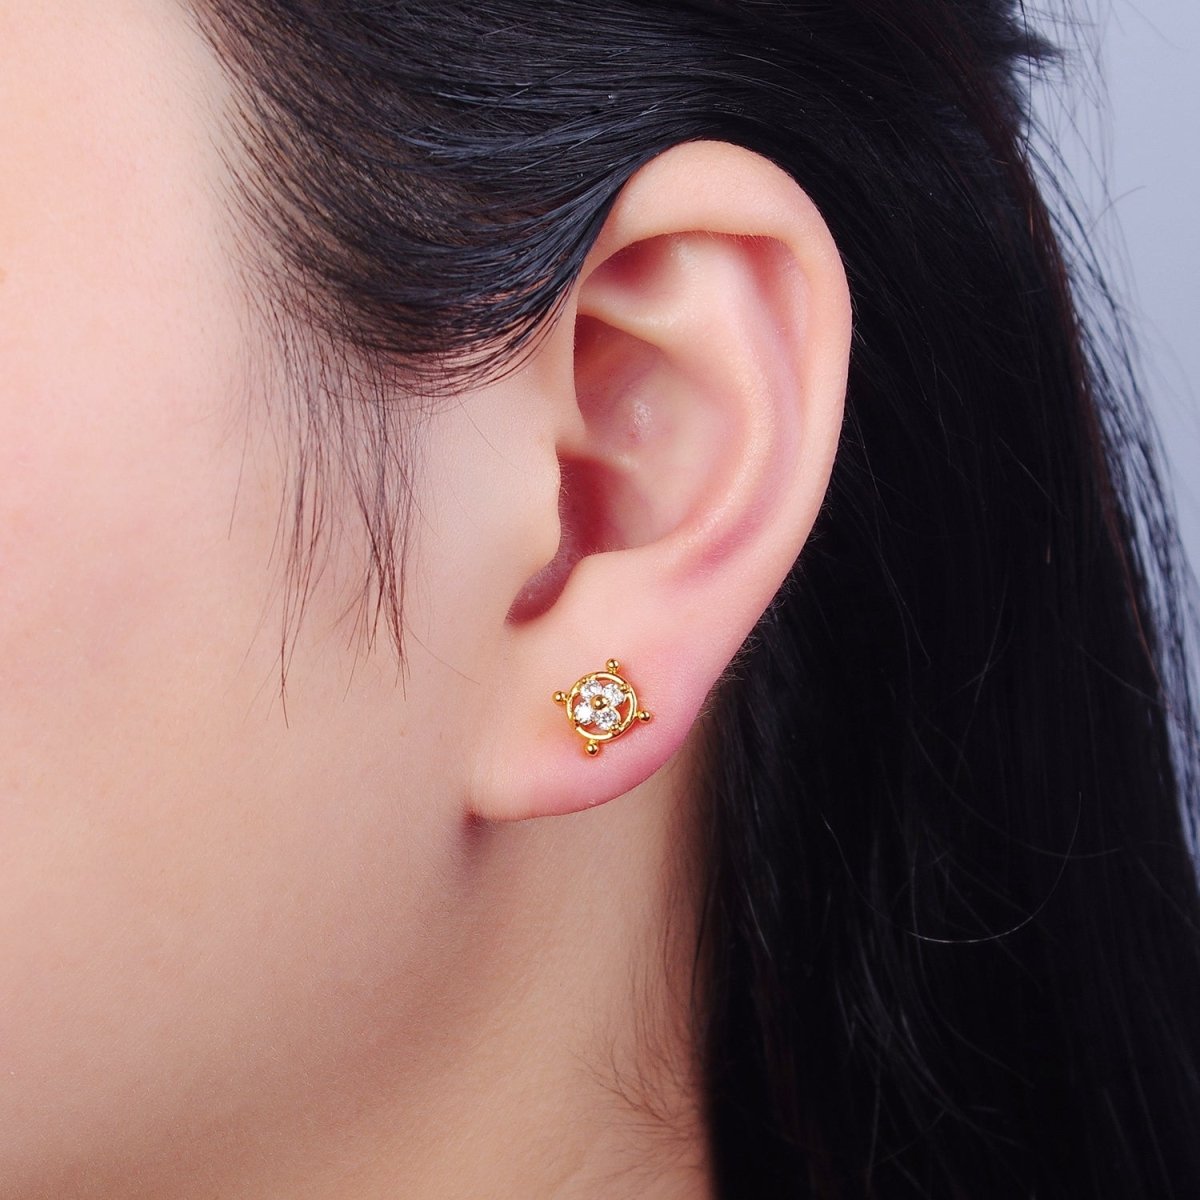 7mm Clover flower earrings Gold plated earrings stud T-545 - DLUXCA